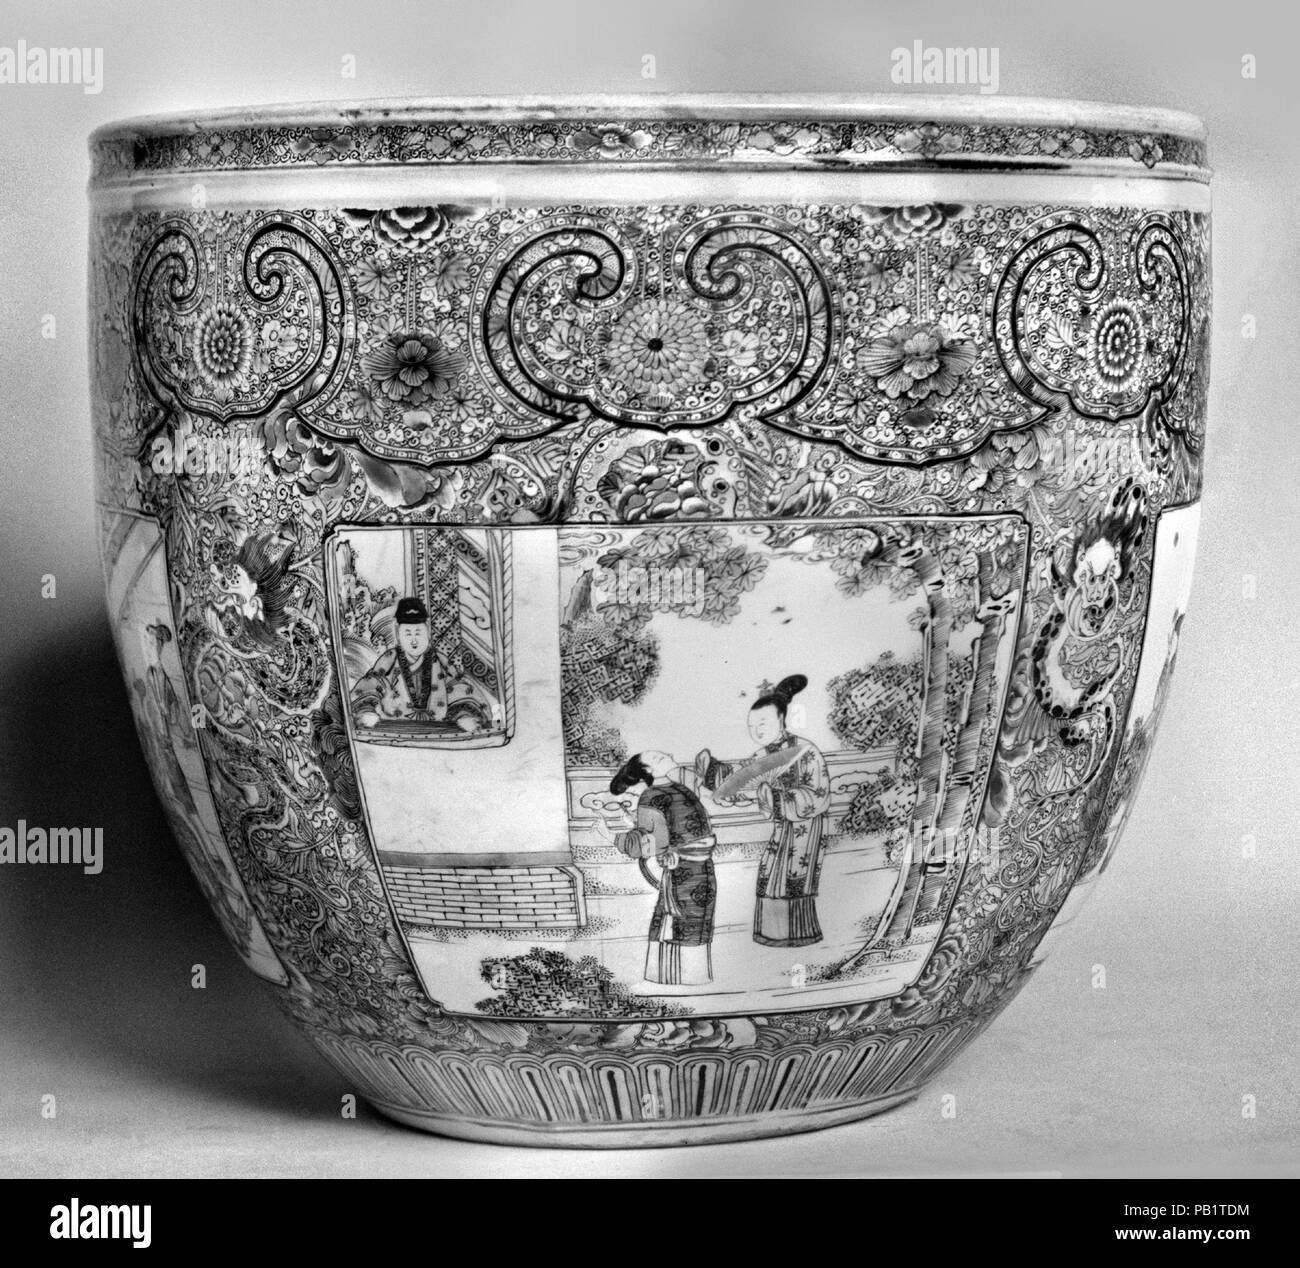 Fish bowl with figural scenes. Culture: China. Dimensions: H. 13 1/2 in. (34.3 cm); Diam. 15 in. (38.1 cm). Date: 19th century. Museum: Metropolitan Museum of Art, New York, USA. Stock Photo